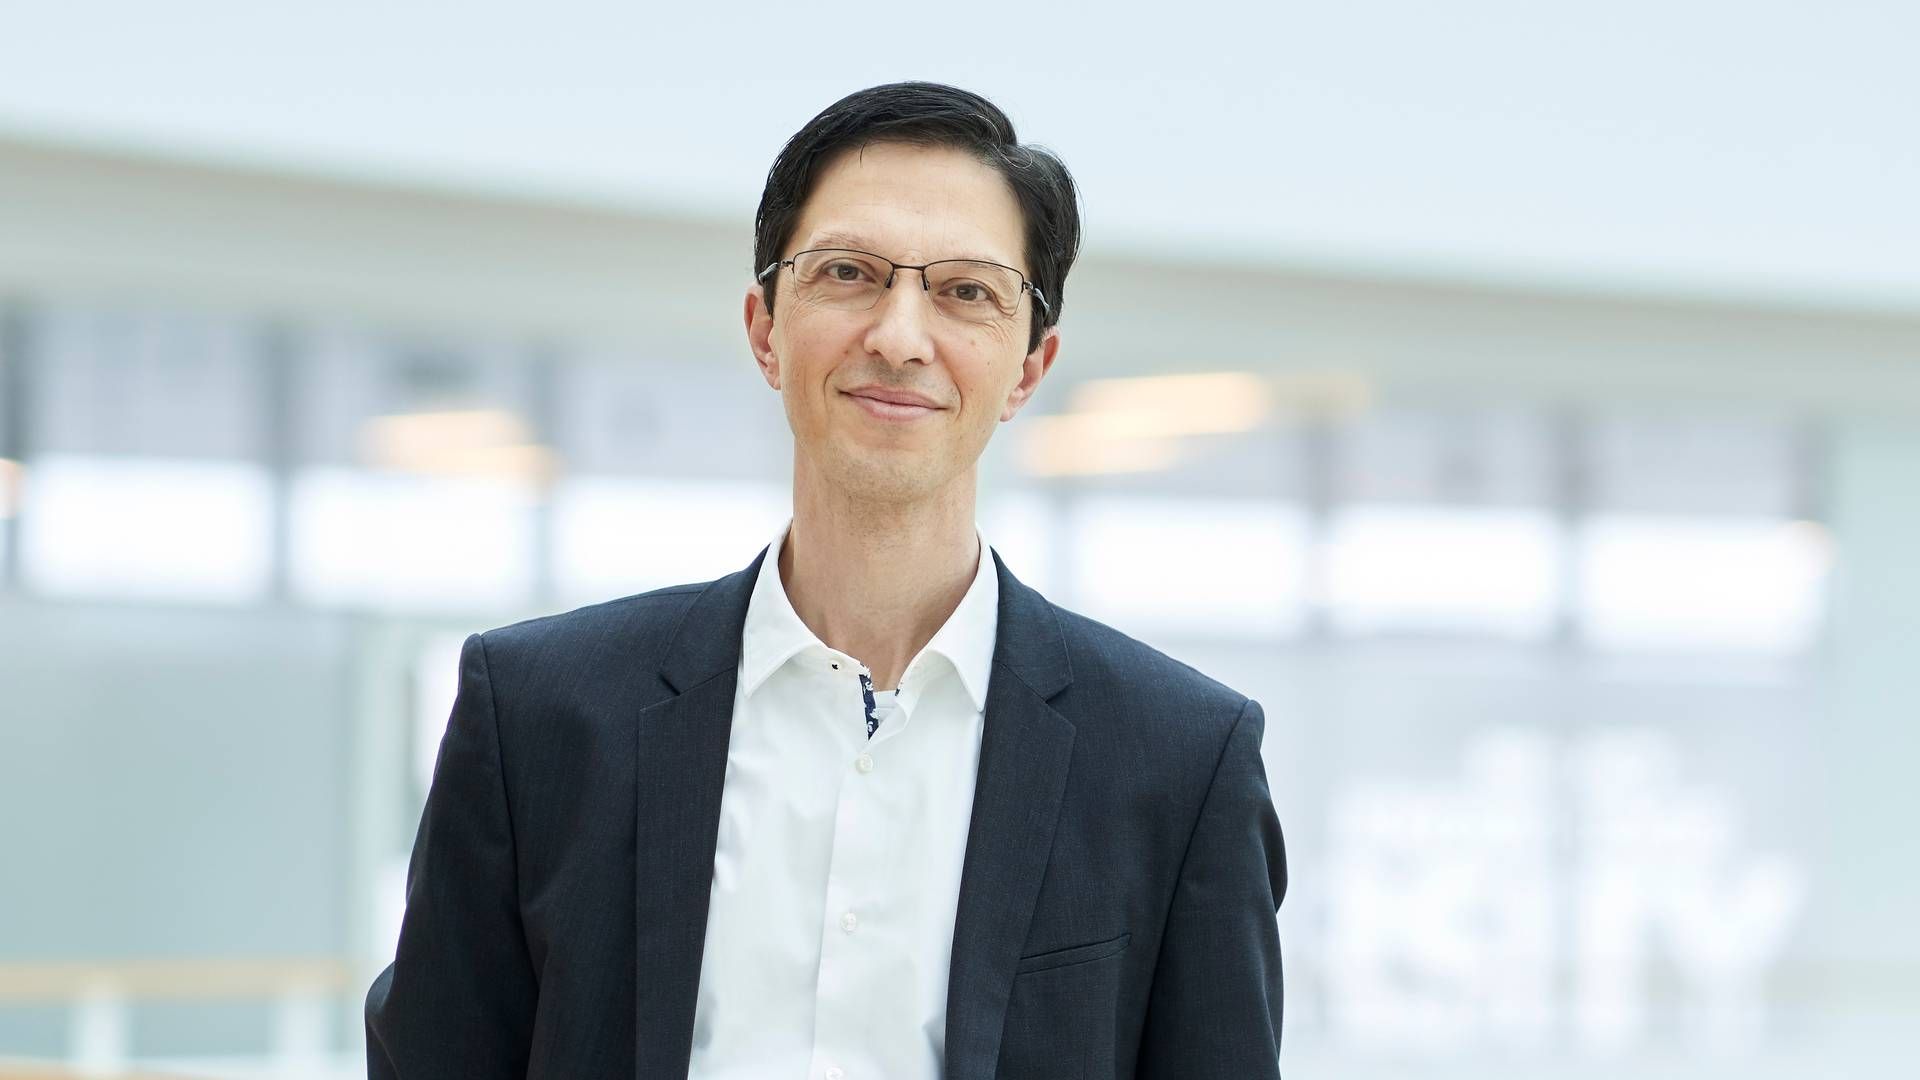 Martin Holst Lange is a new board member at Pharmacosmos. | Photo: Novo Nordisk / Pr